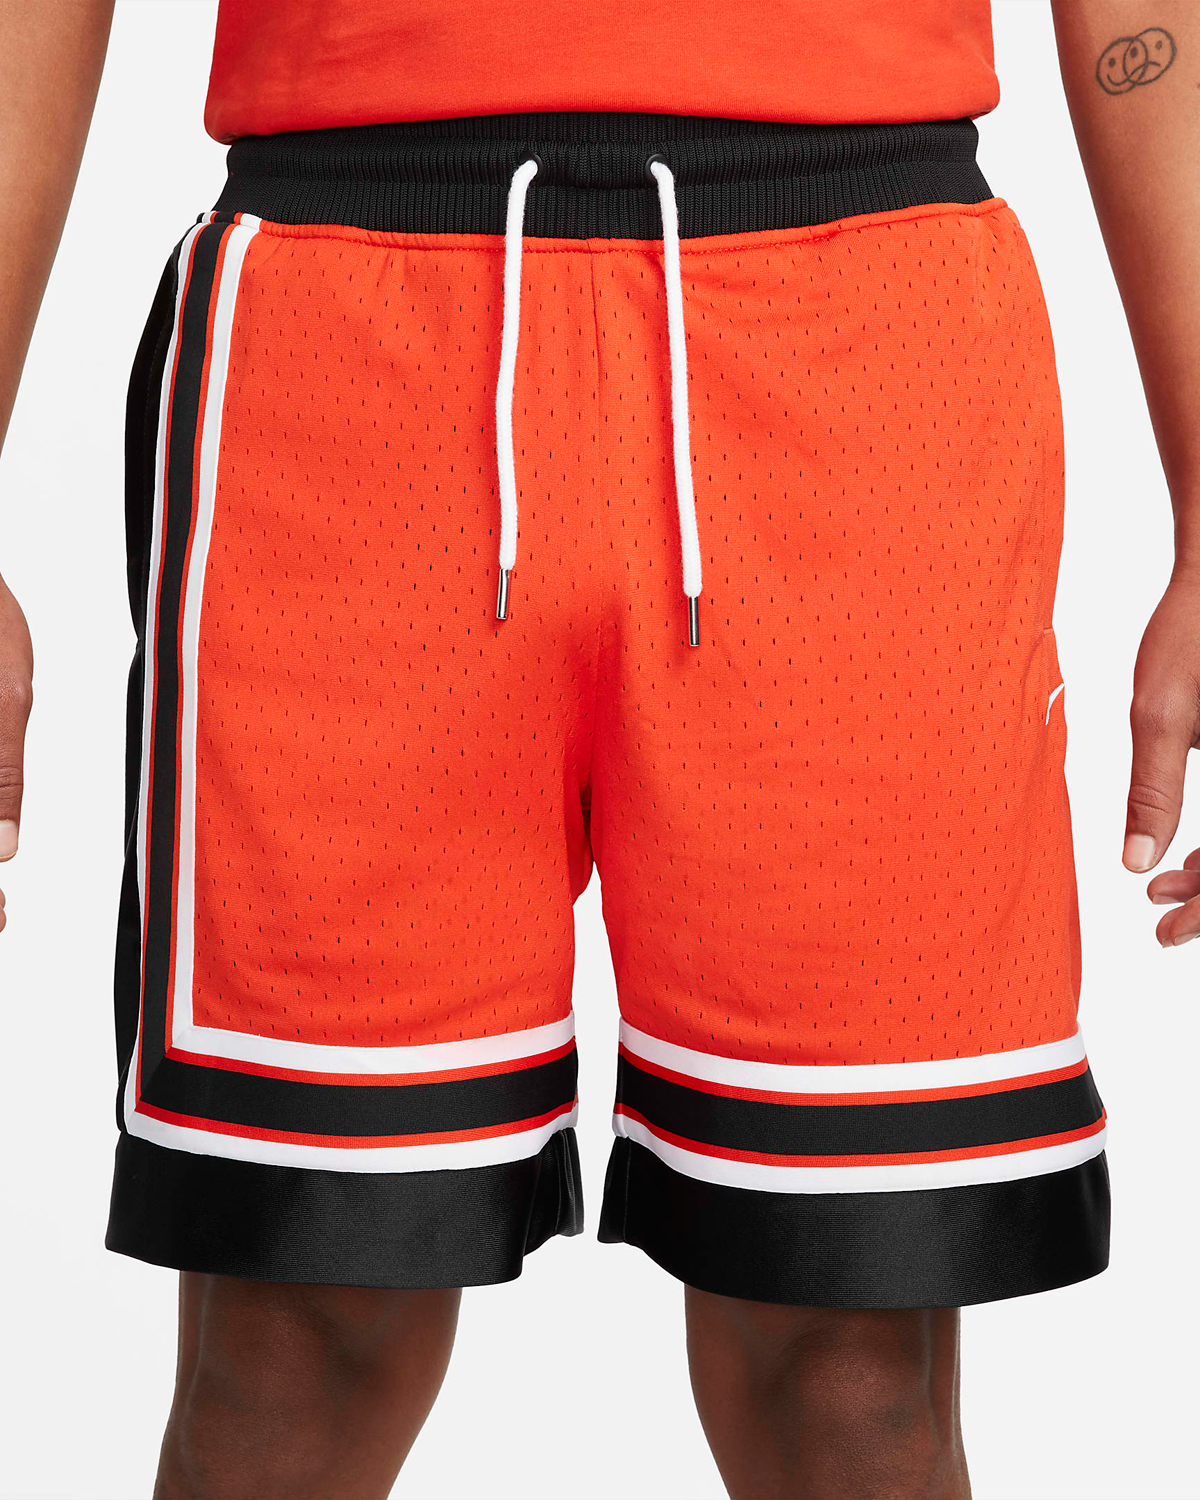 Nike-Circa-Basketball-Shorts-Picante-Red